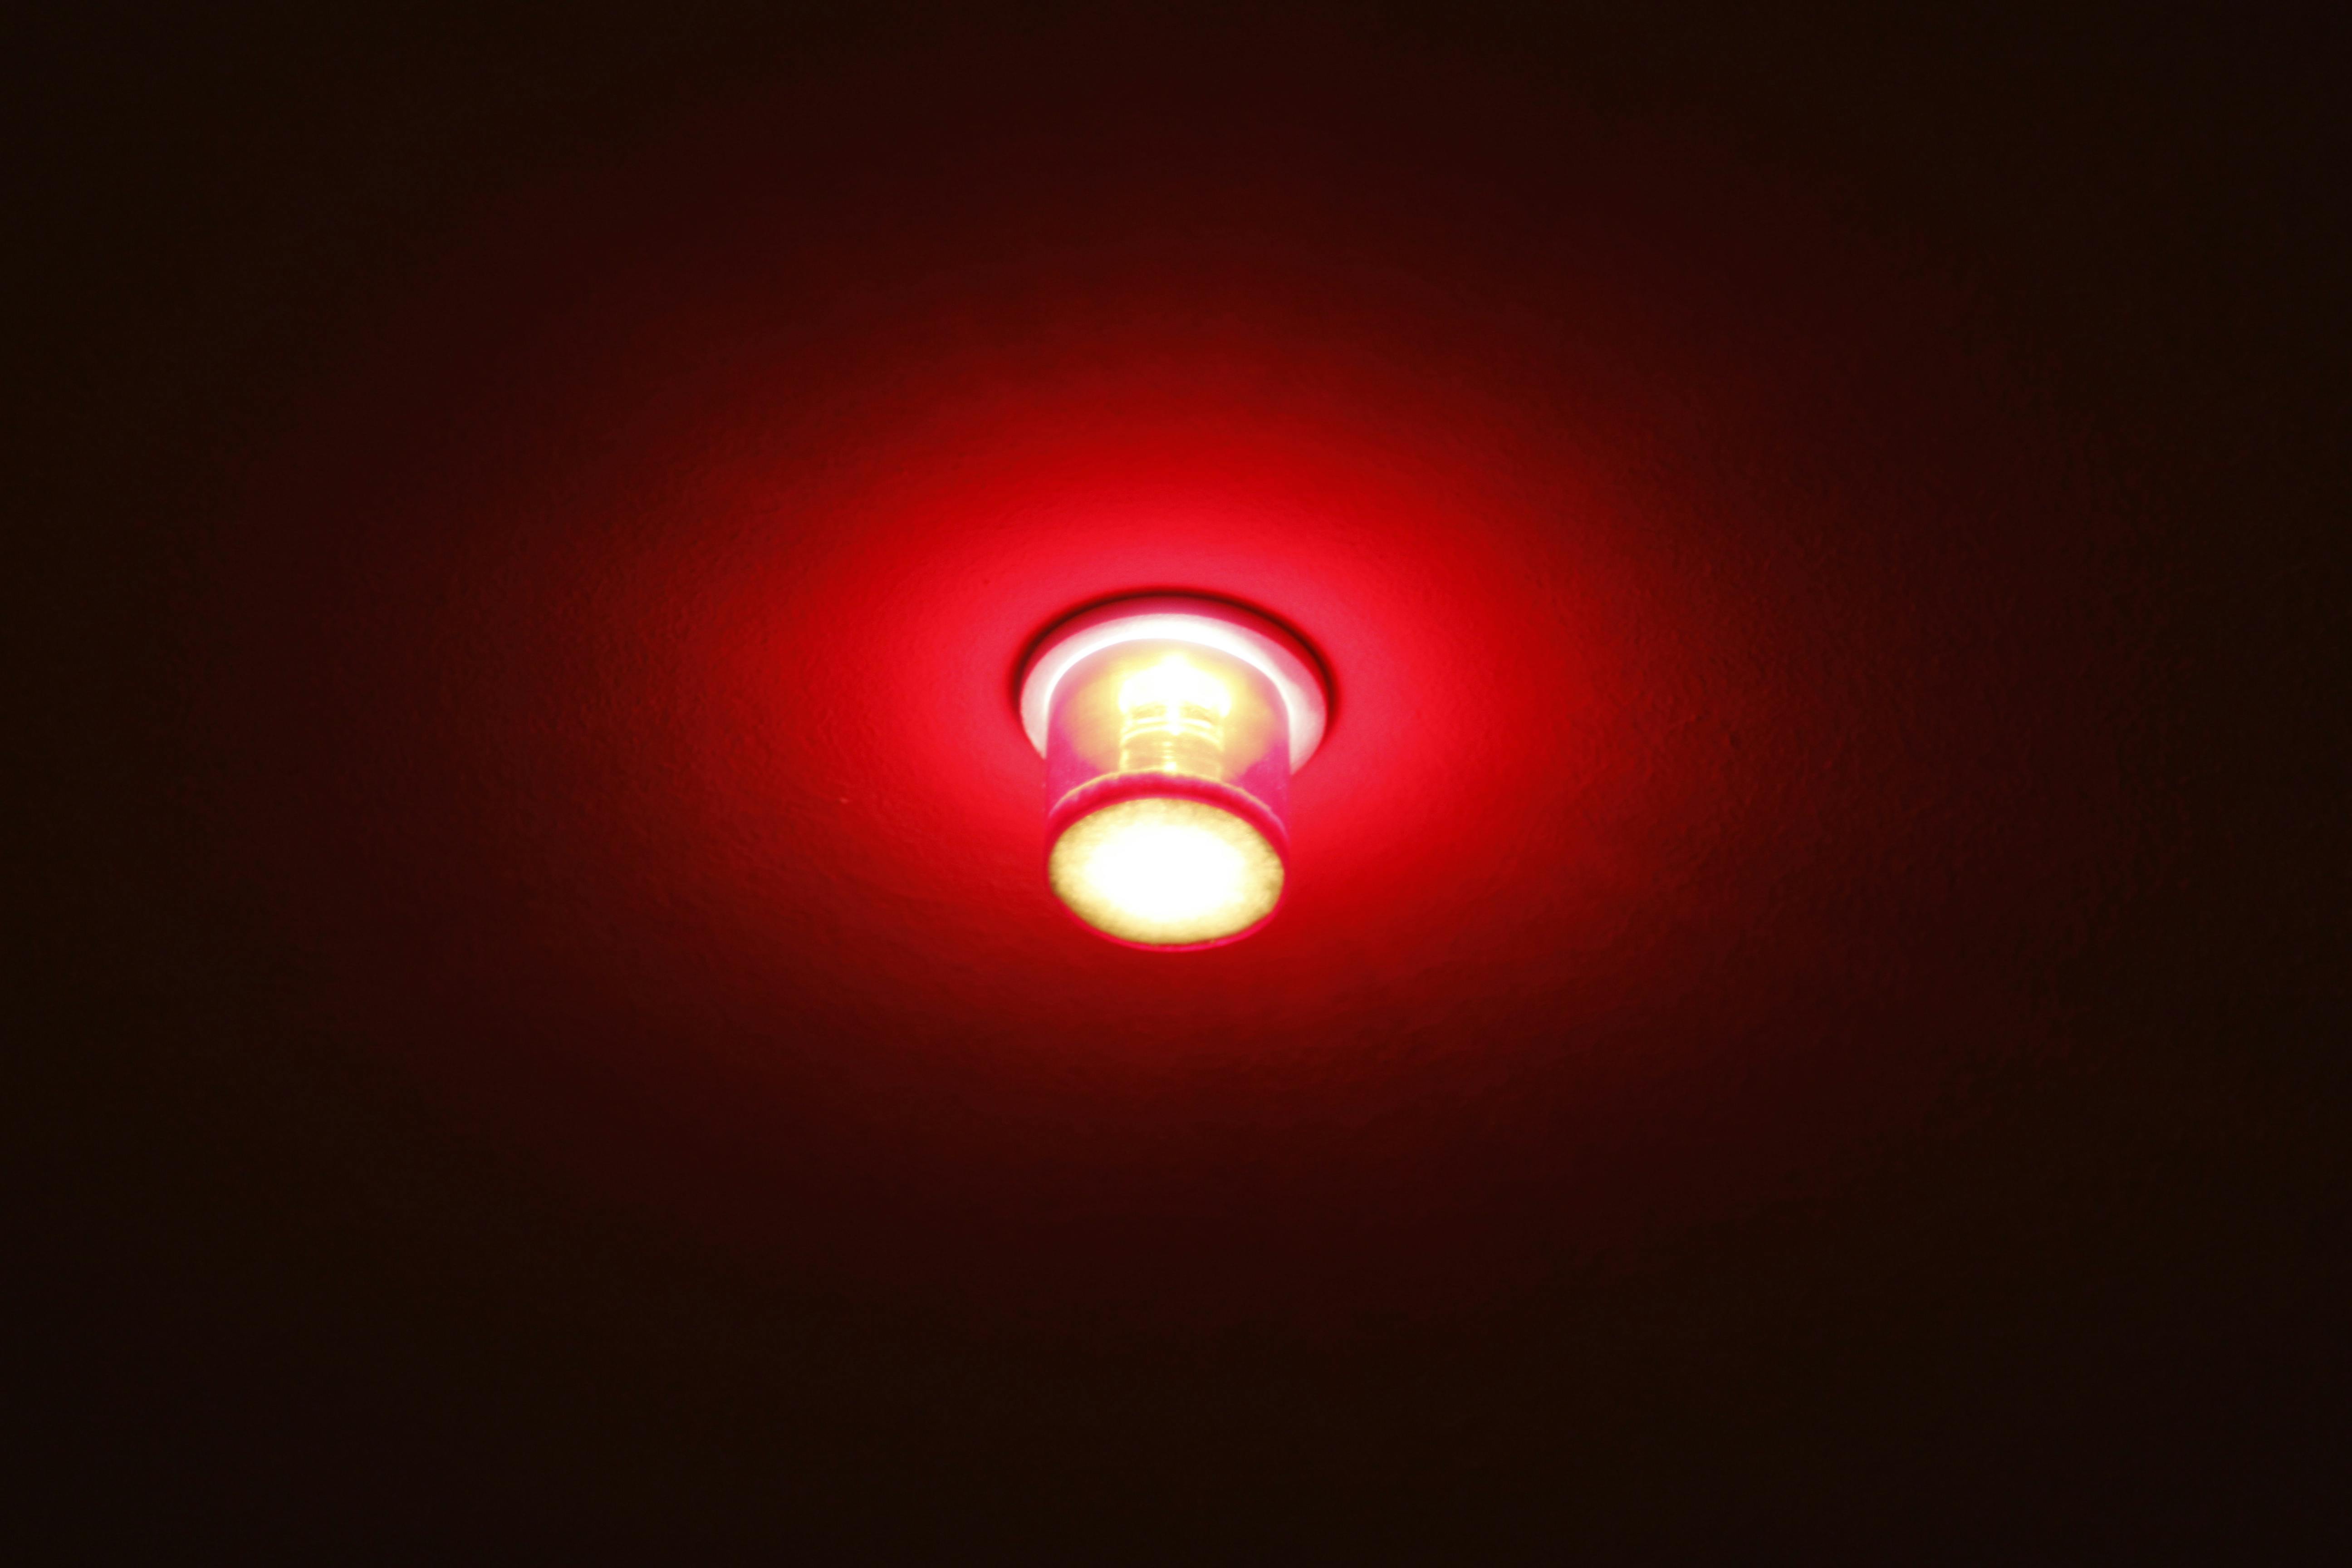 Rotlichtlampe Anwendung Nasennebenhöhlen